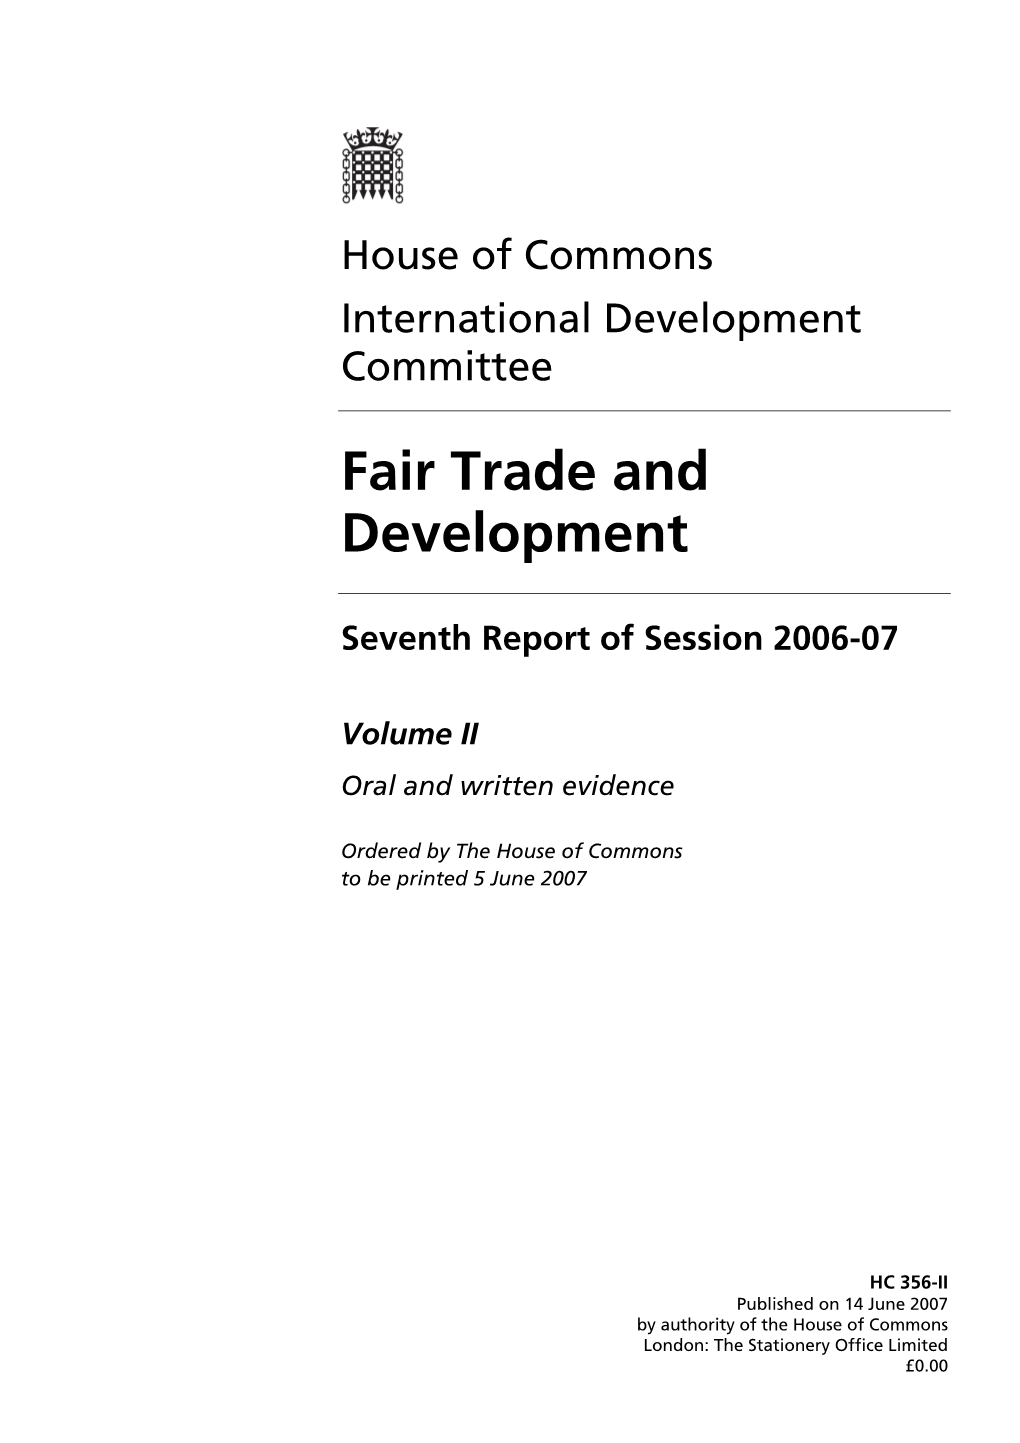 Fair Trade and Development